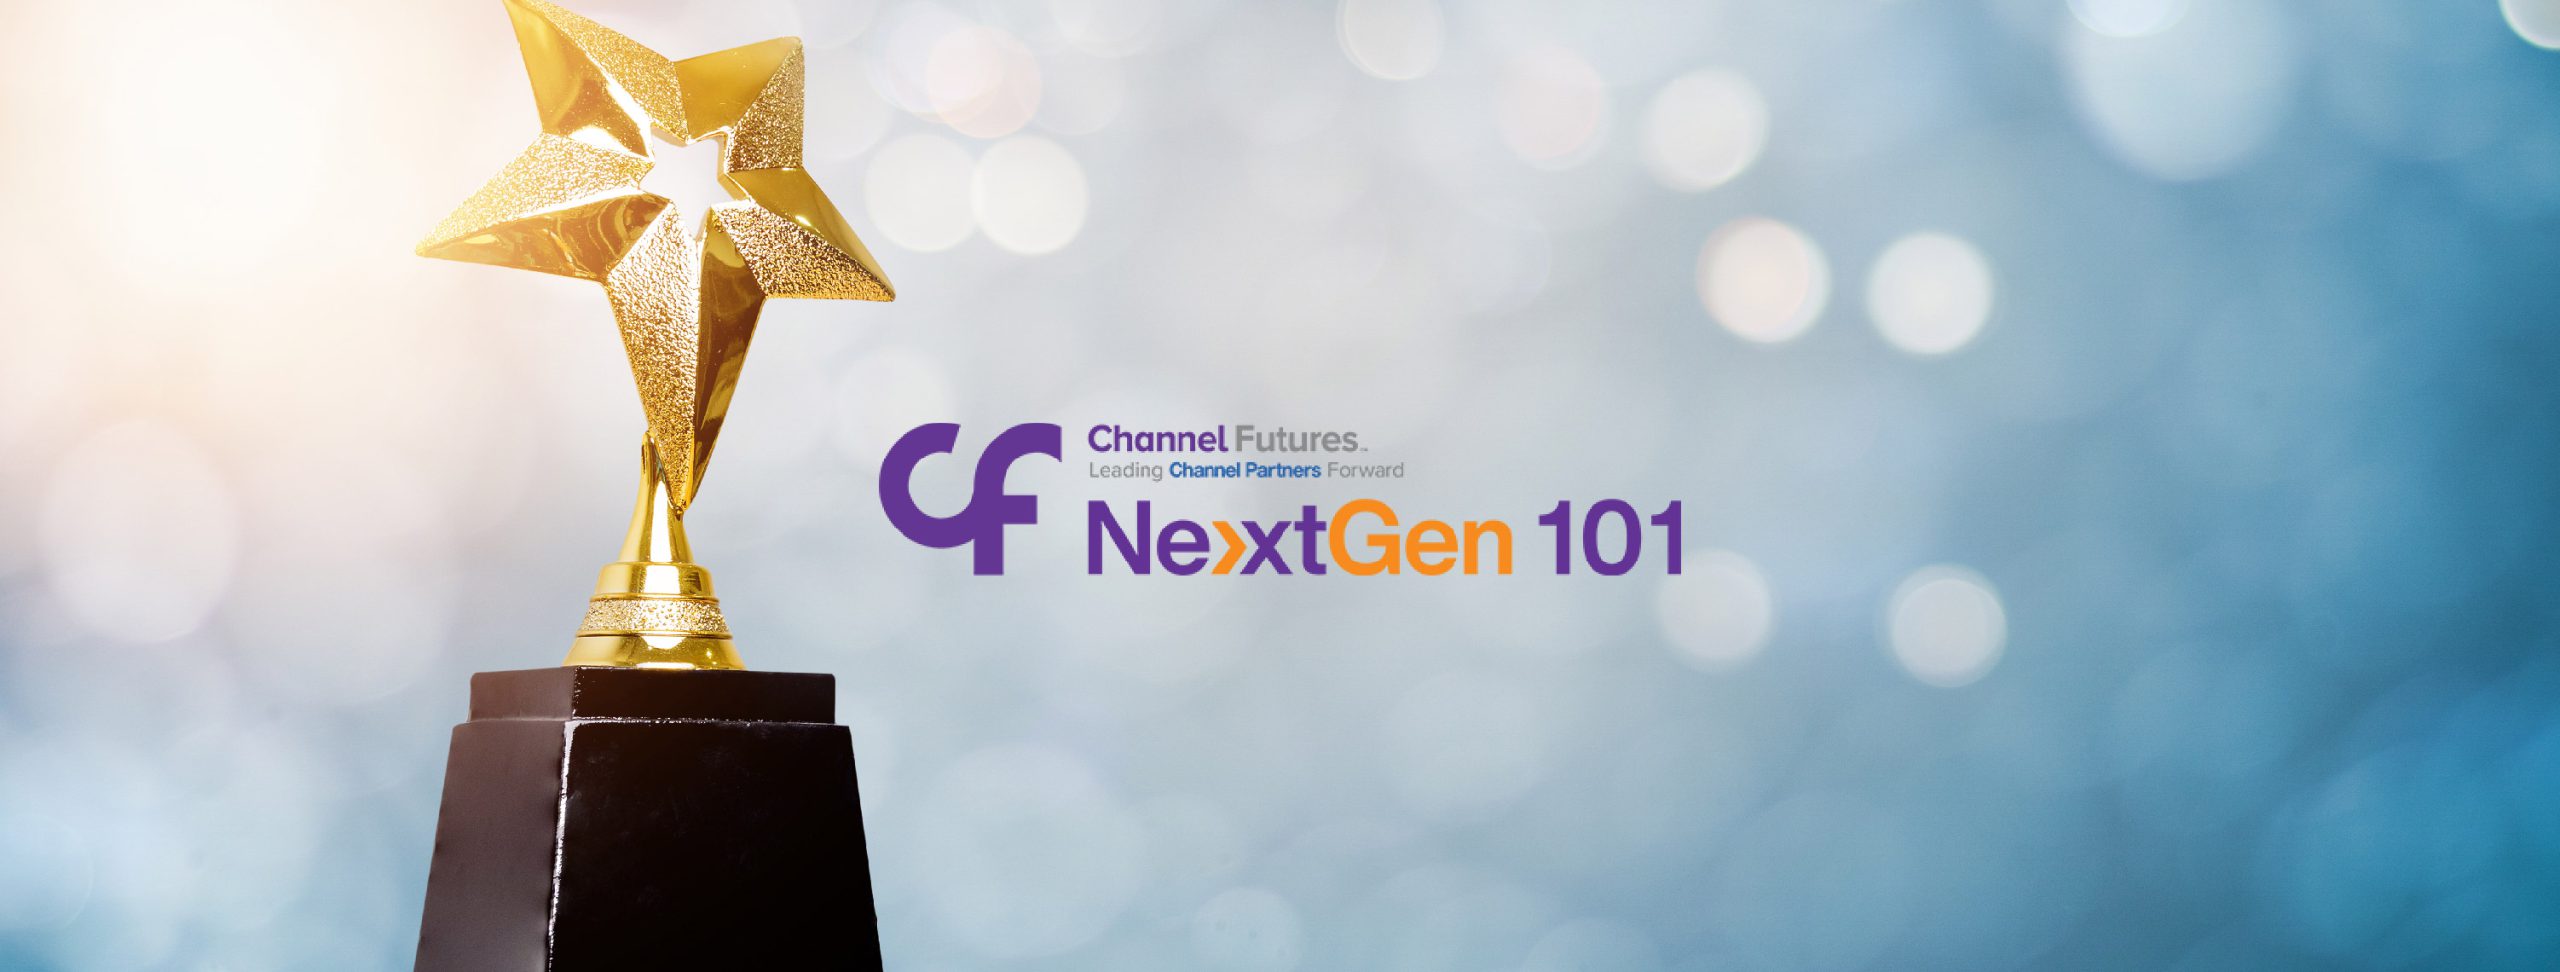 CF NextGen 101 logo with an award